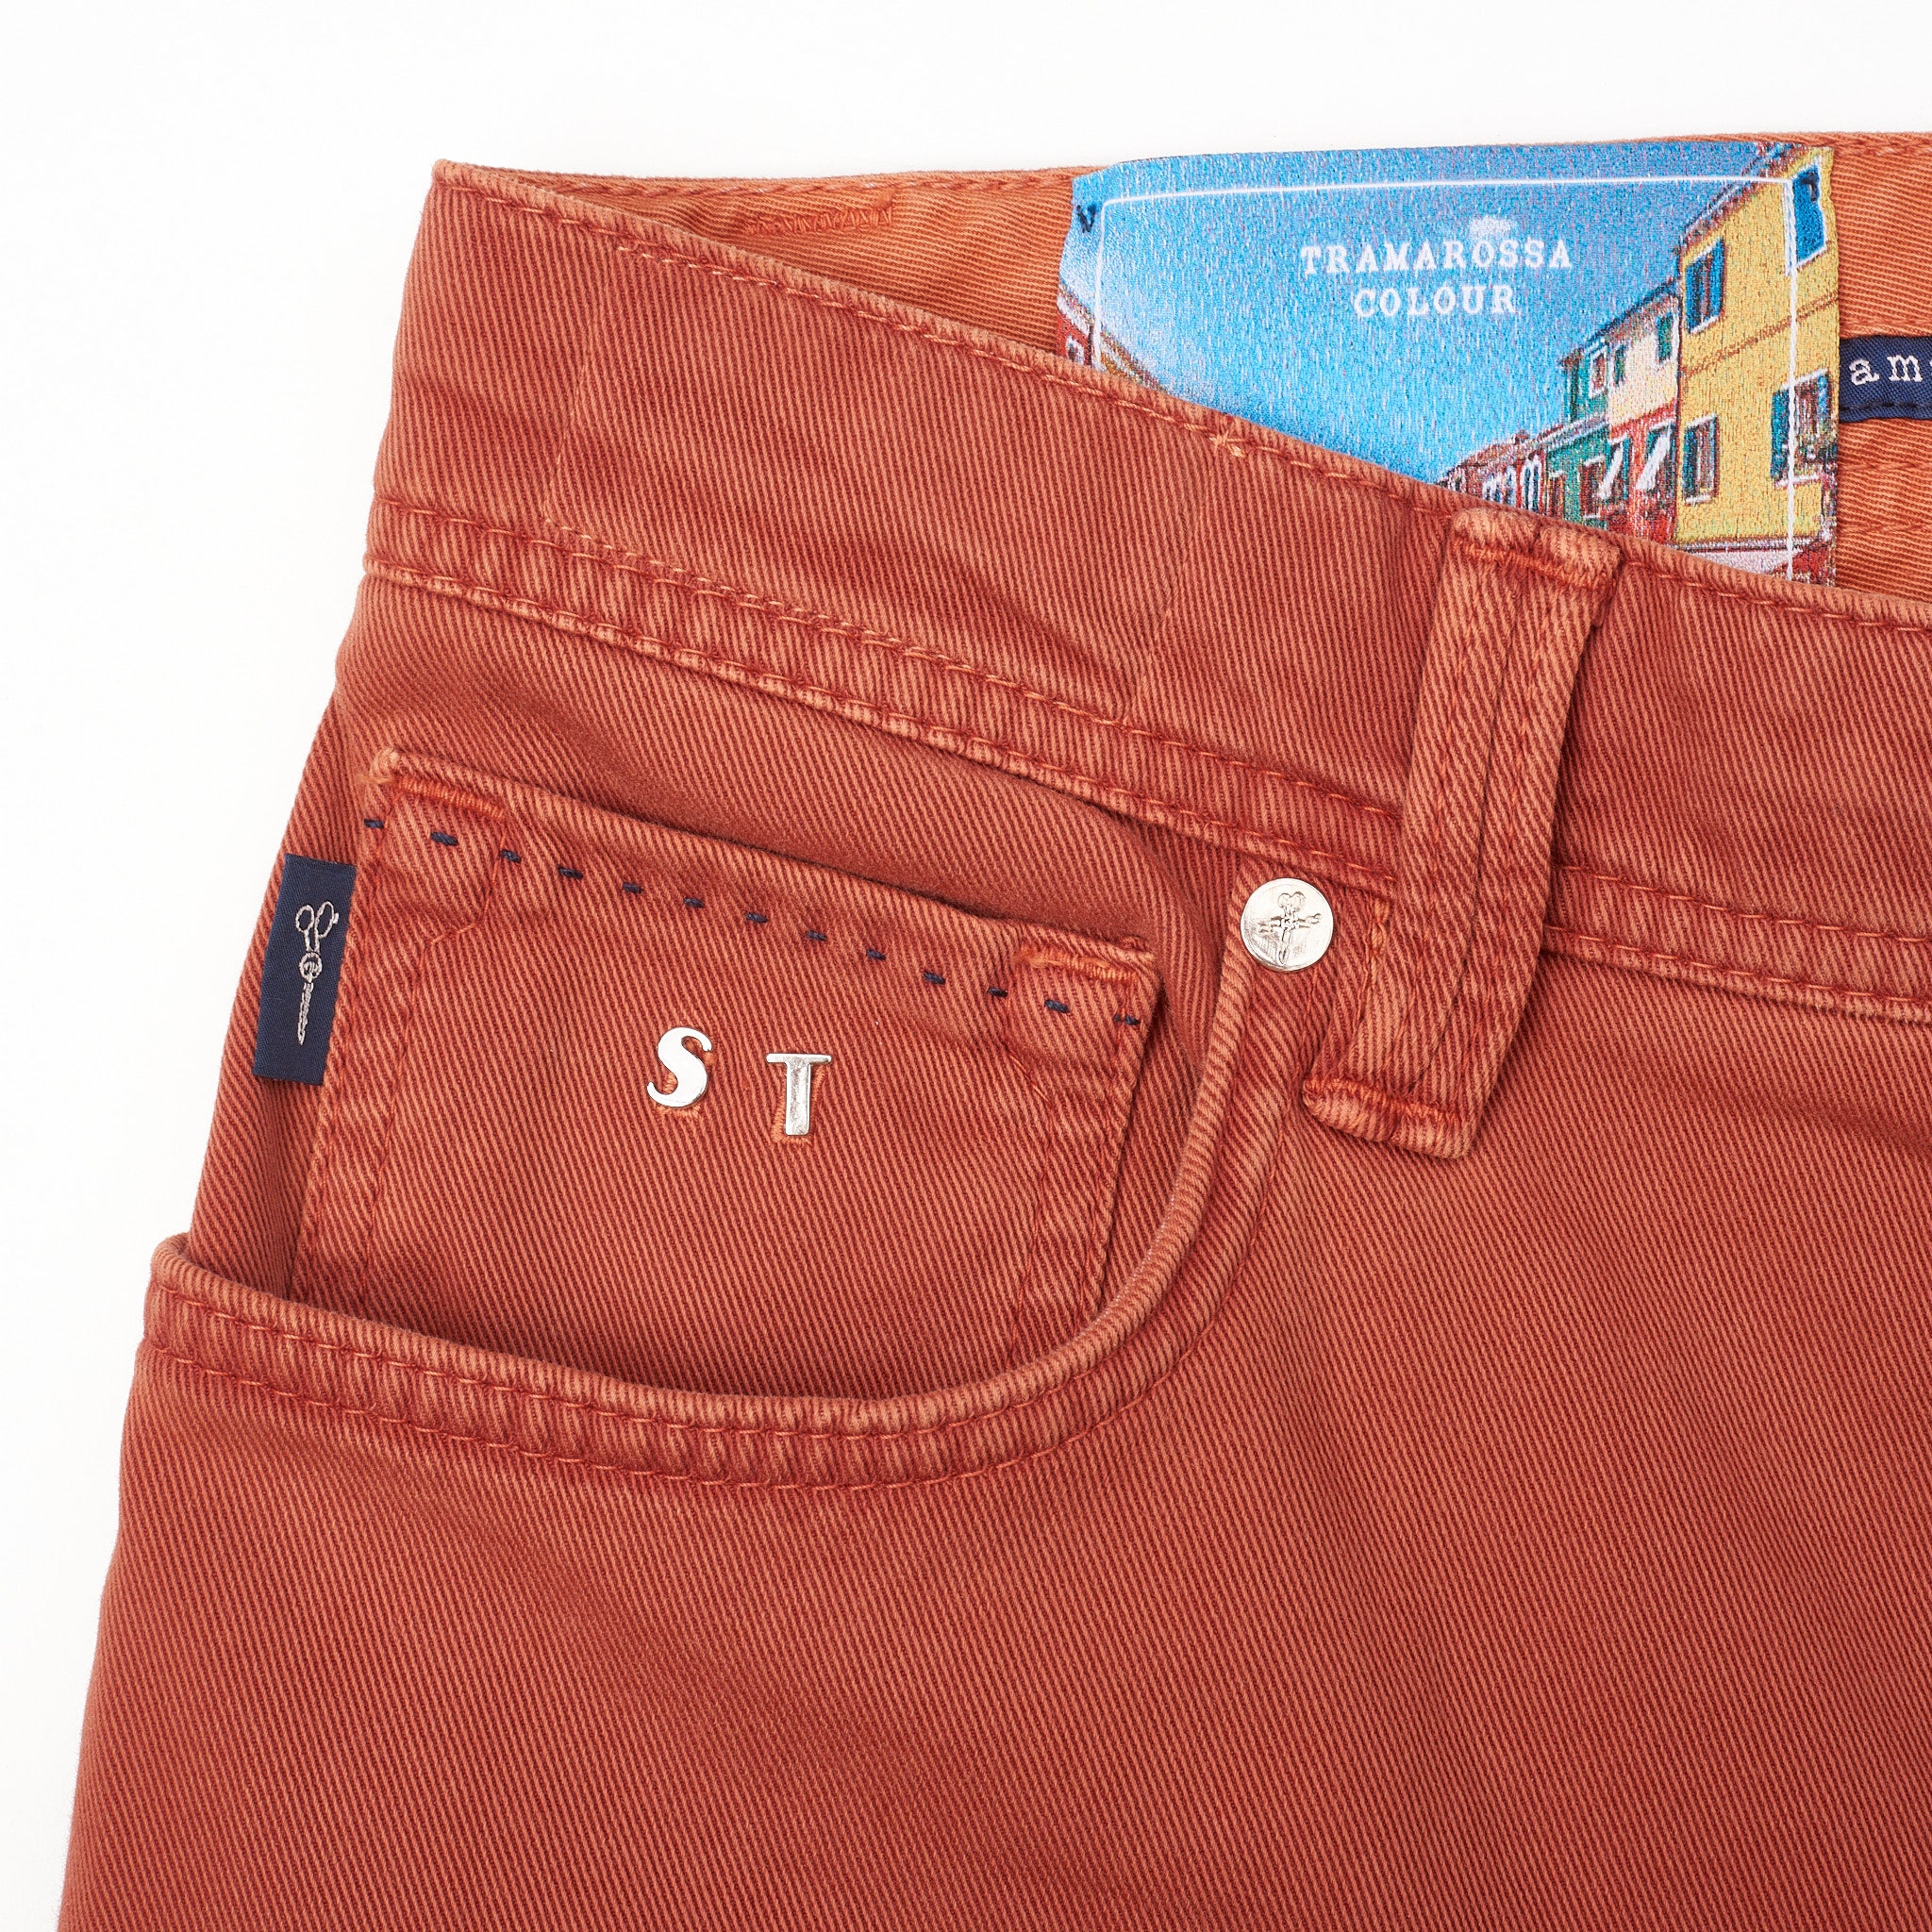 TRAMAROSSA Colour Leonardo Brick Red Cotton Stretch Slim Fit Jeans NEW 33 TRAMAROSSA